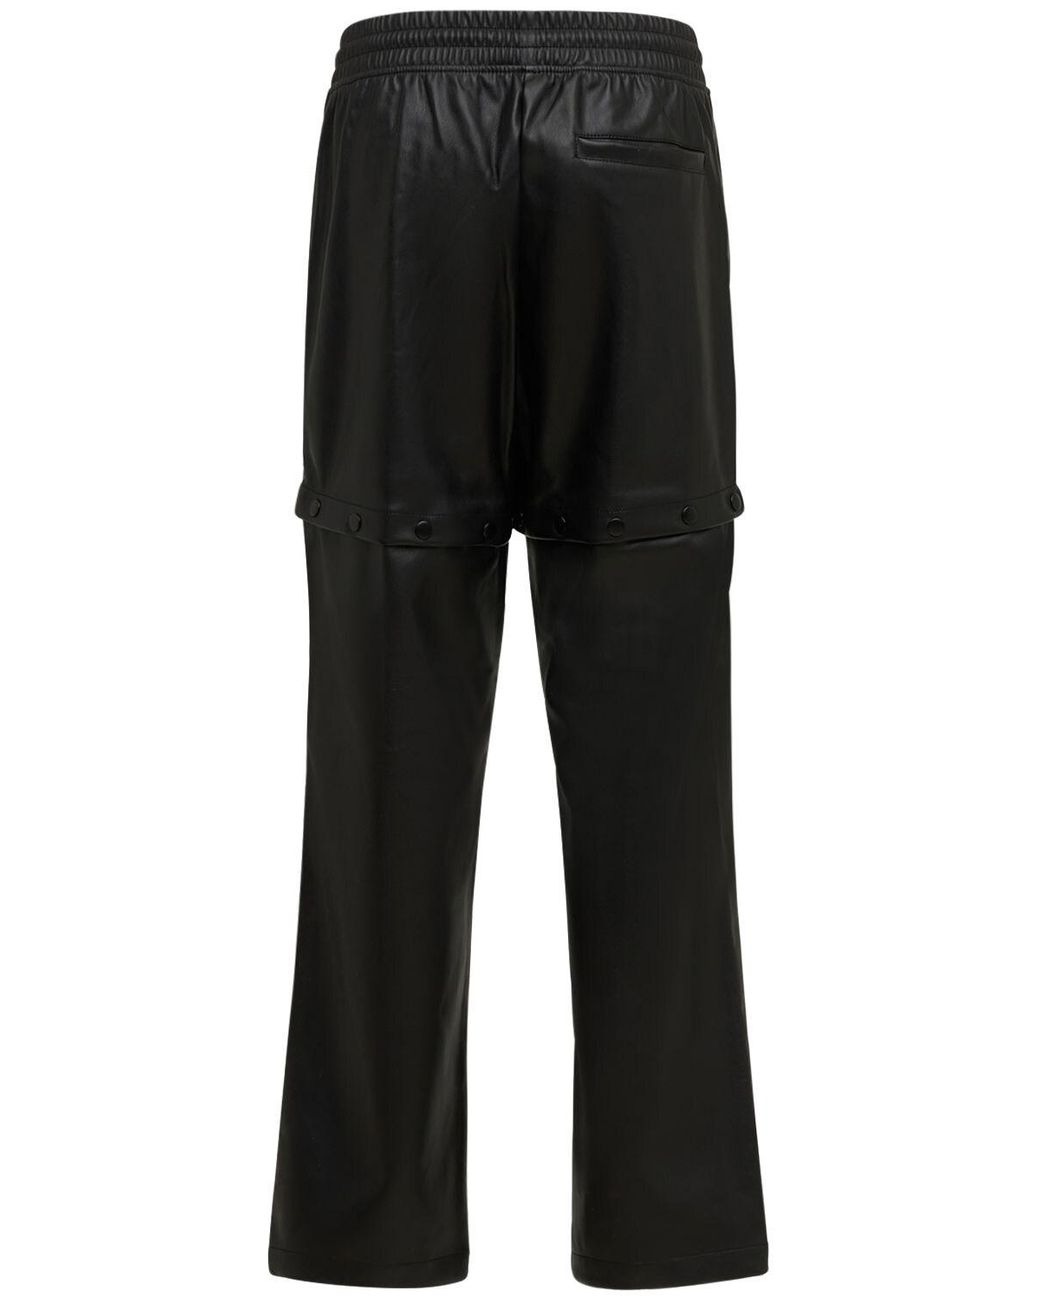 adidas Originals Always Original Faux Leather Track Pants in Black | Lyst